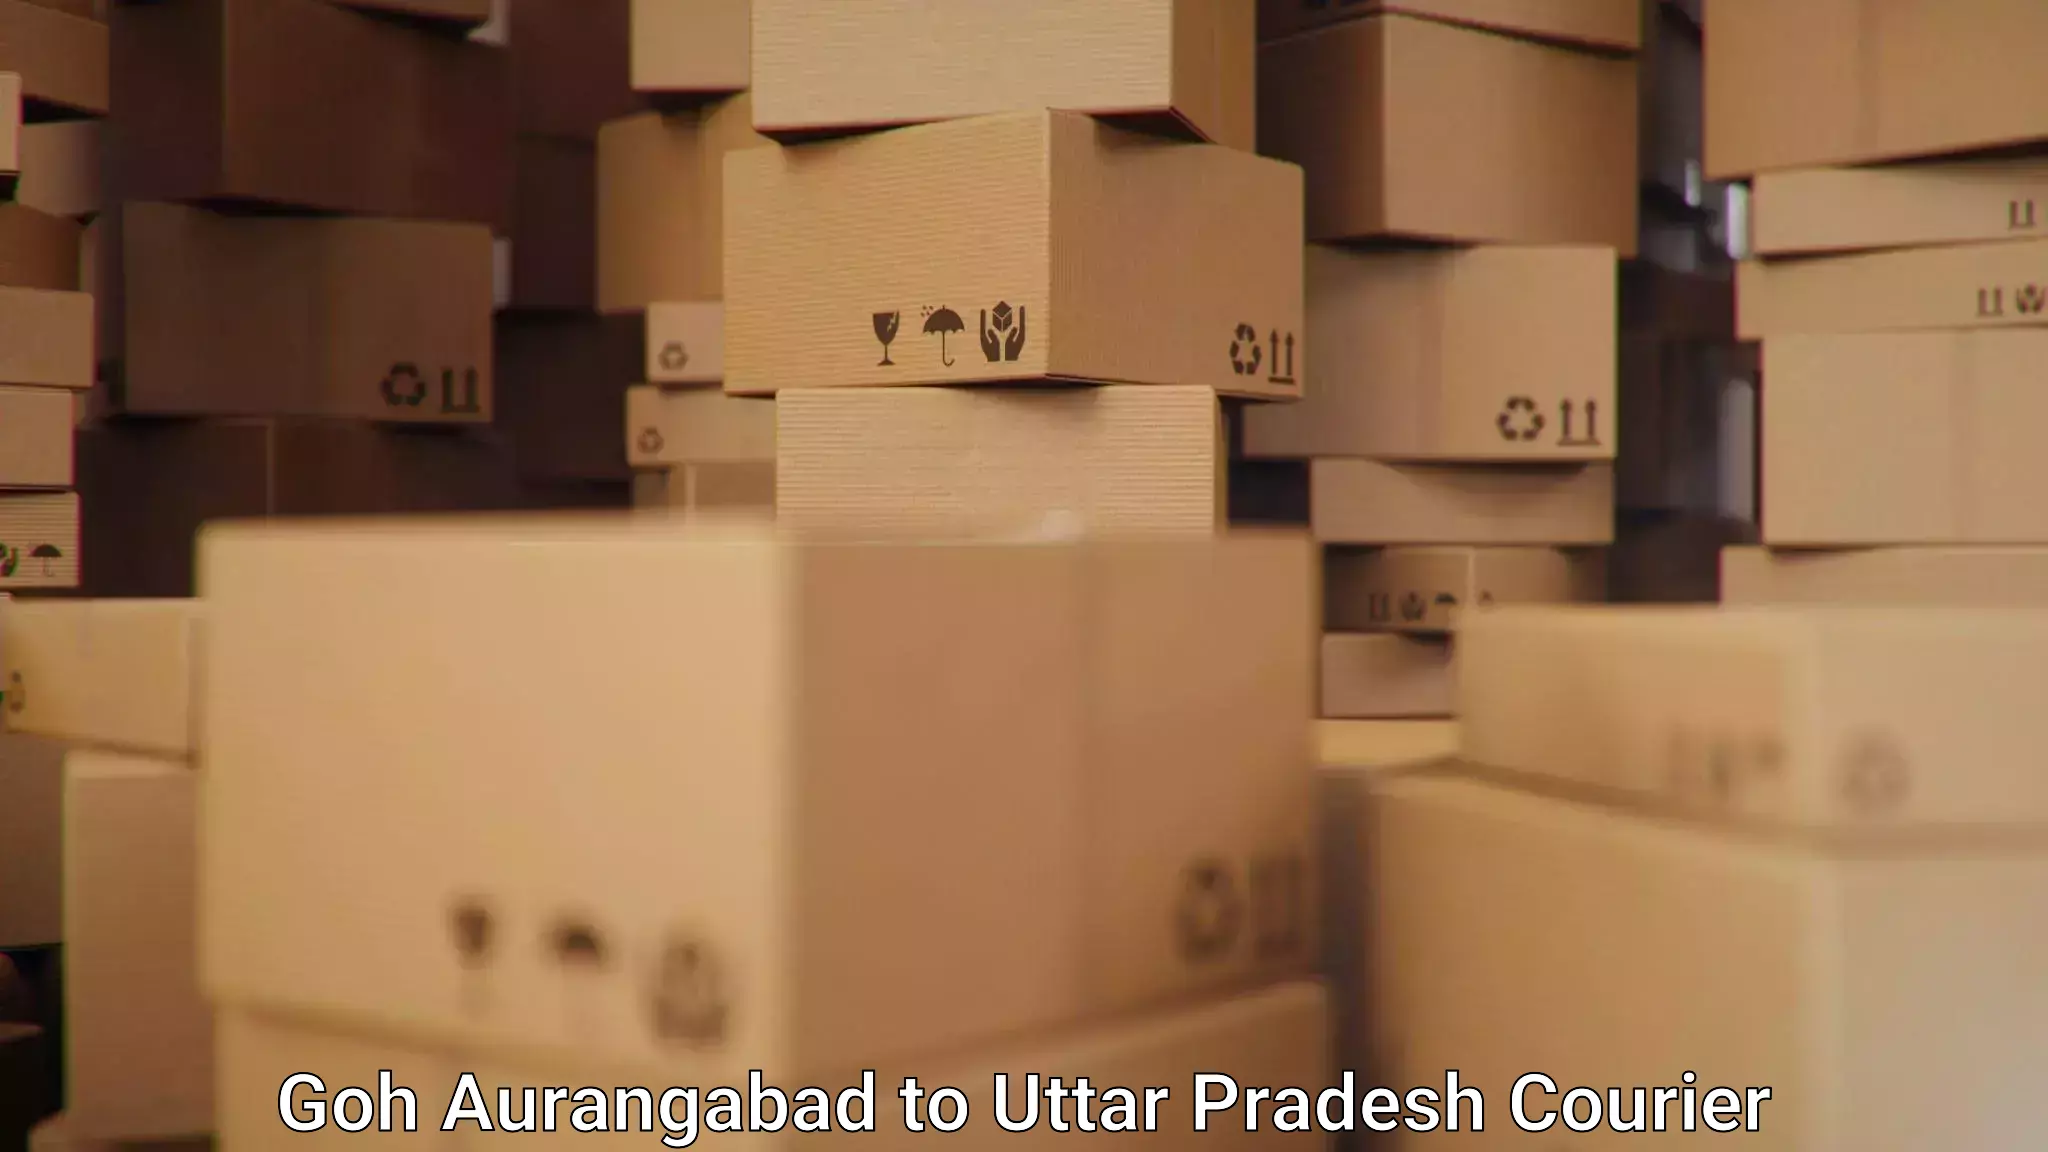 24/7 courier service Goh Aurangabad to Dibai